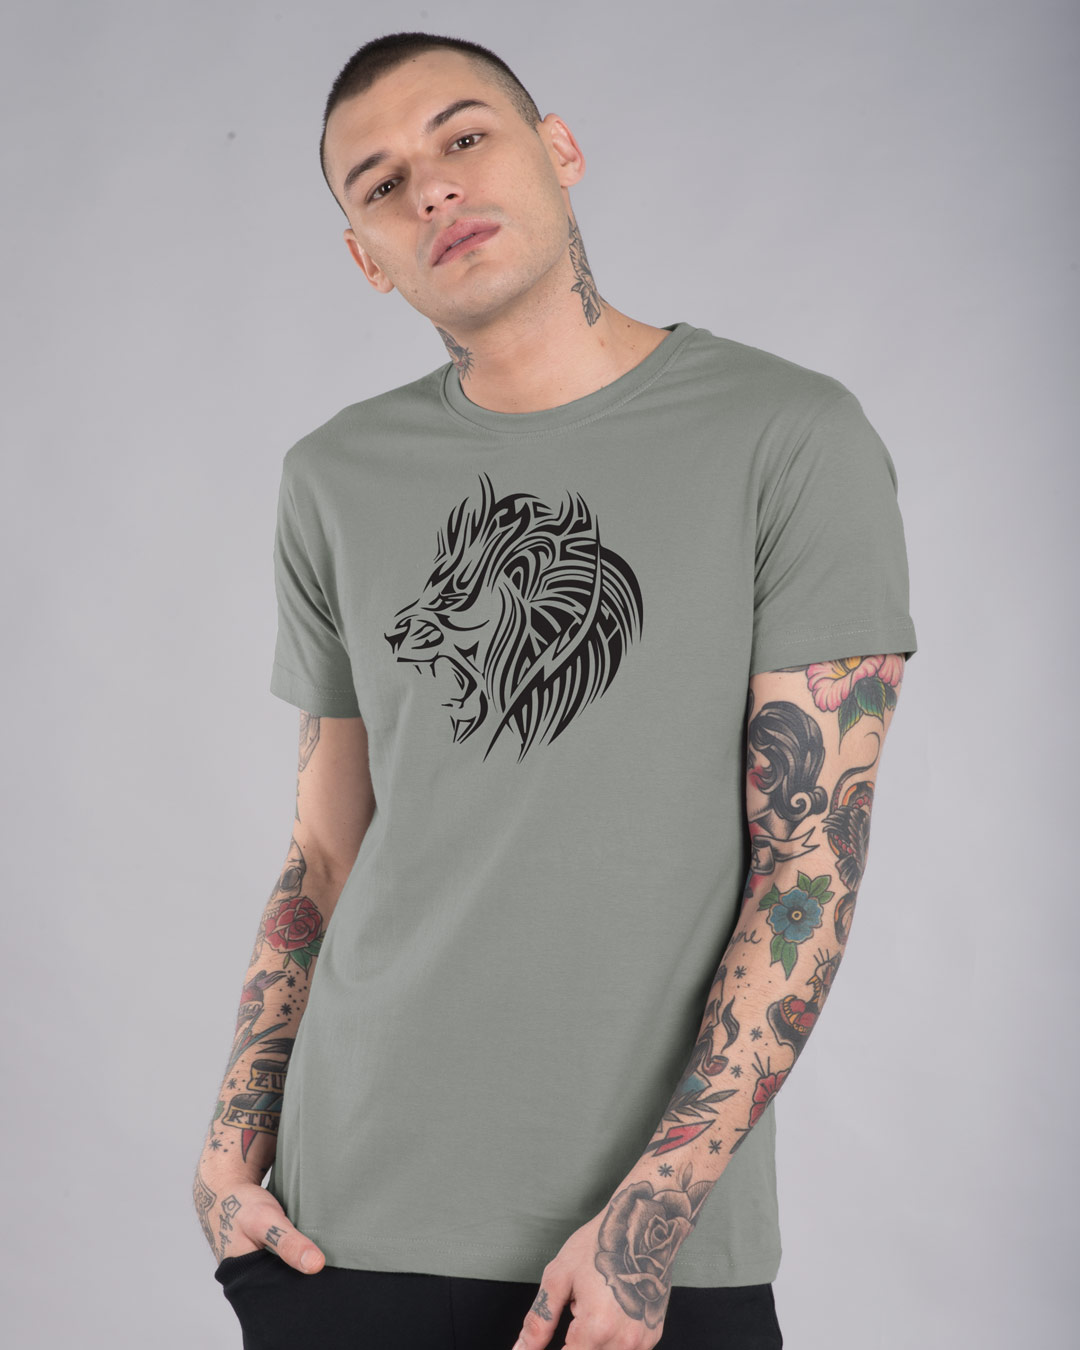 Buy Tribal Lion Half Sleeve T-Shirt for Men Online at Bewakoof